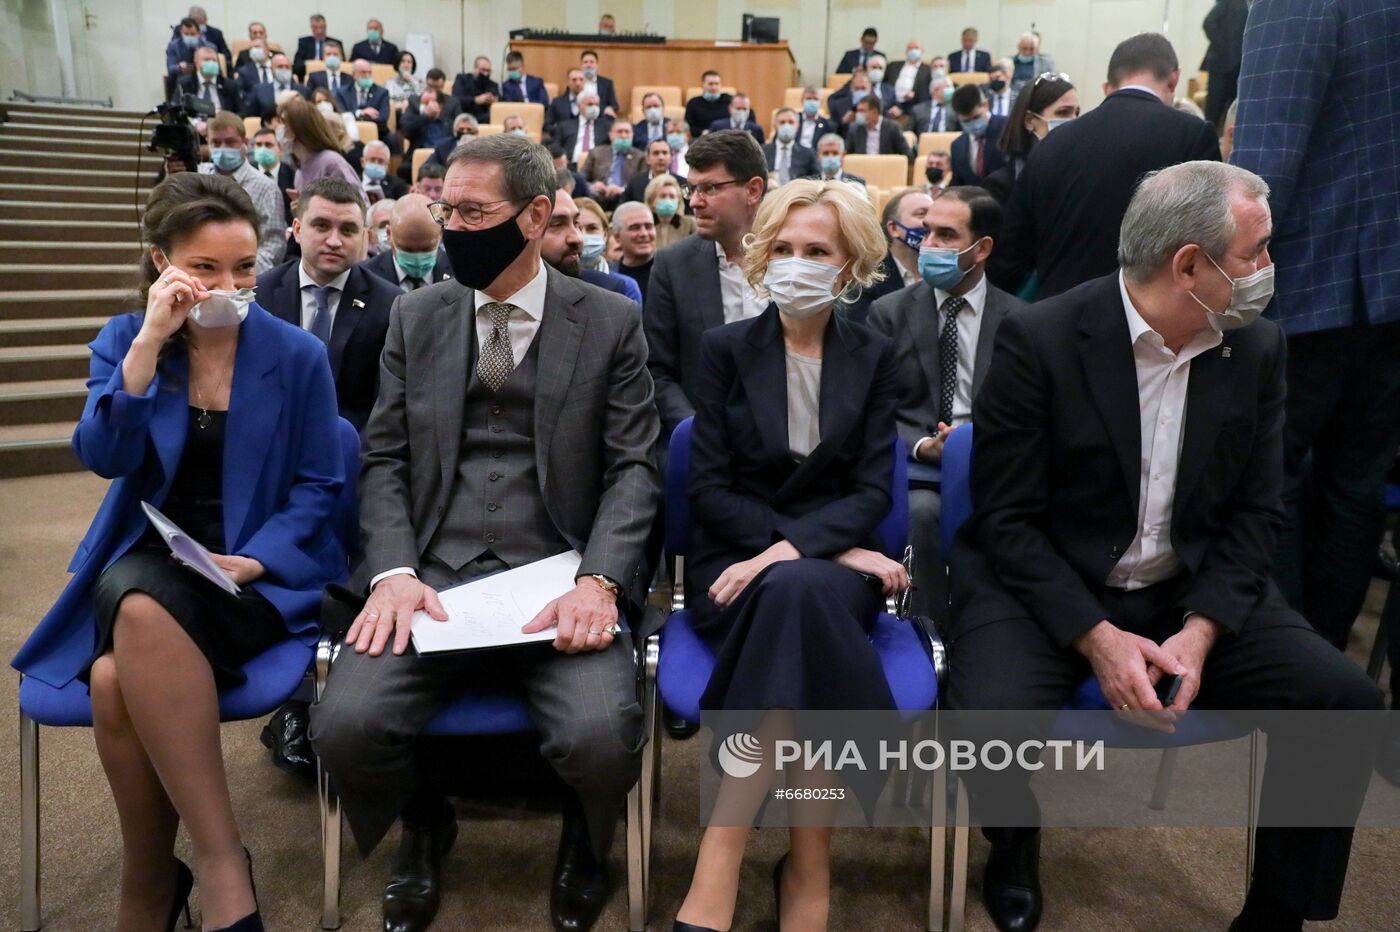 Заседание фракции партии "Единая Россия" с участием министра финансов РФ А. Силуанова